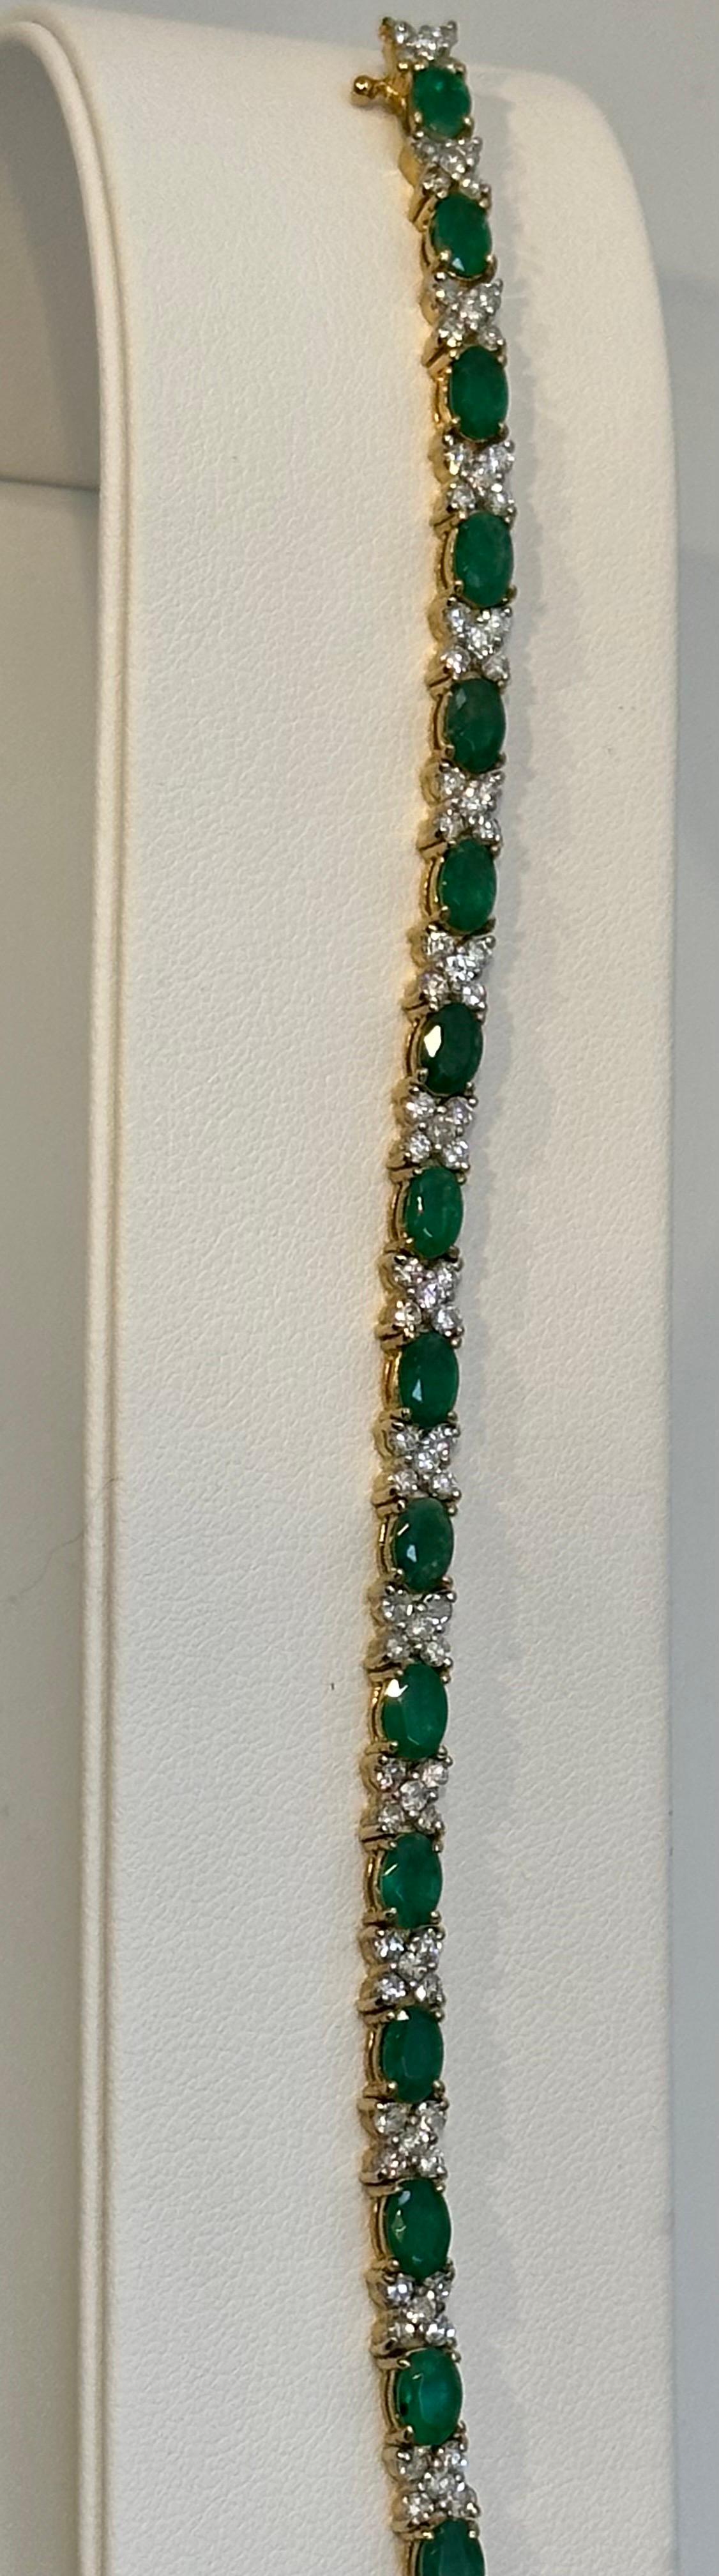 7.5 Carat Emerald 2.2 Carat Diamond Flower Tennis Bracelet 14 Karat Yellow Gold 3